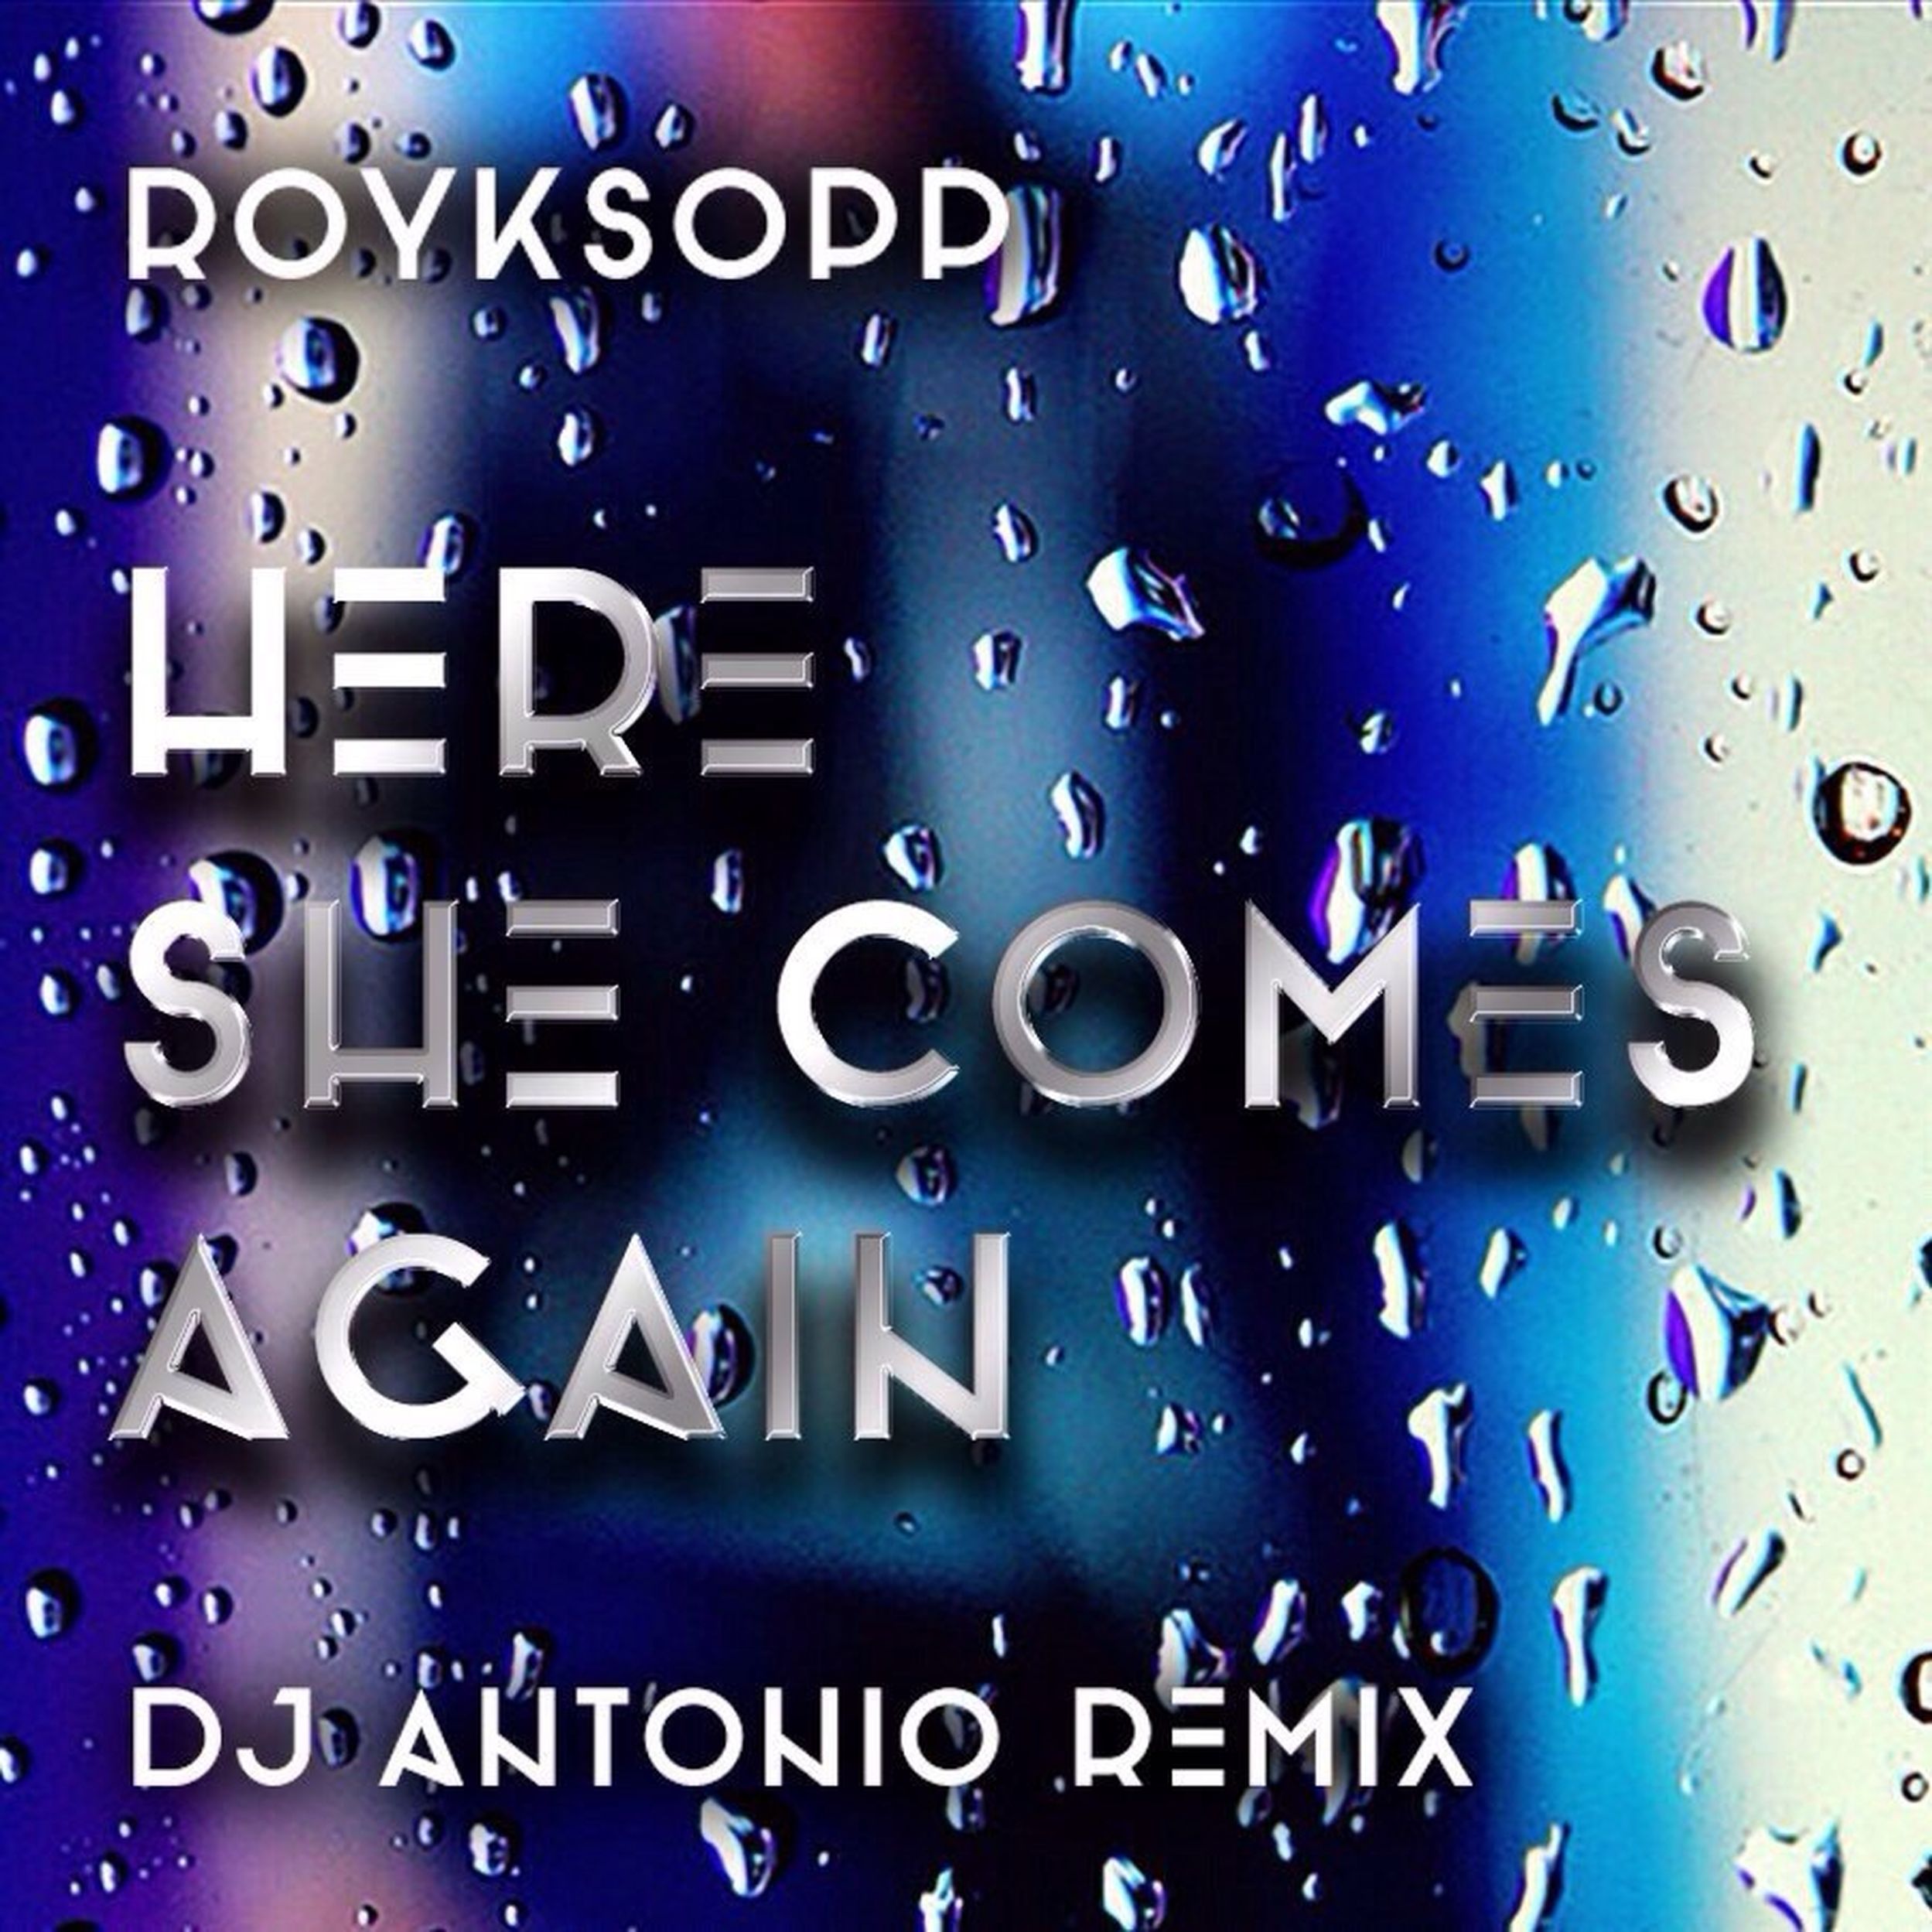 Royksopp she comes again mp3. Here she comes again (DJ Antonio Remix). Royksopp here she comes again. DJ Antonio Royksopp. Royksopp here she comes again DJ Antonio Remix.